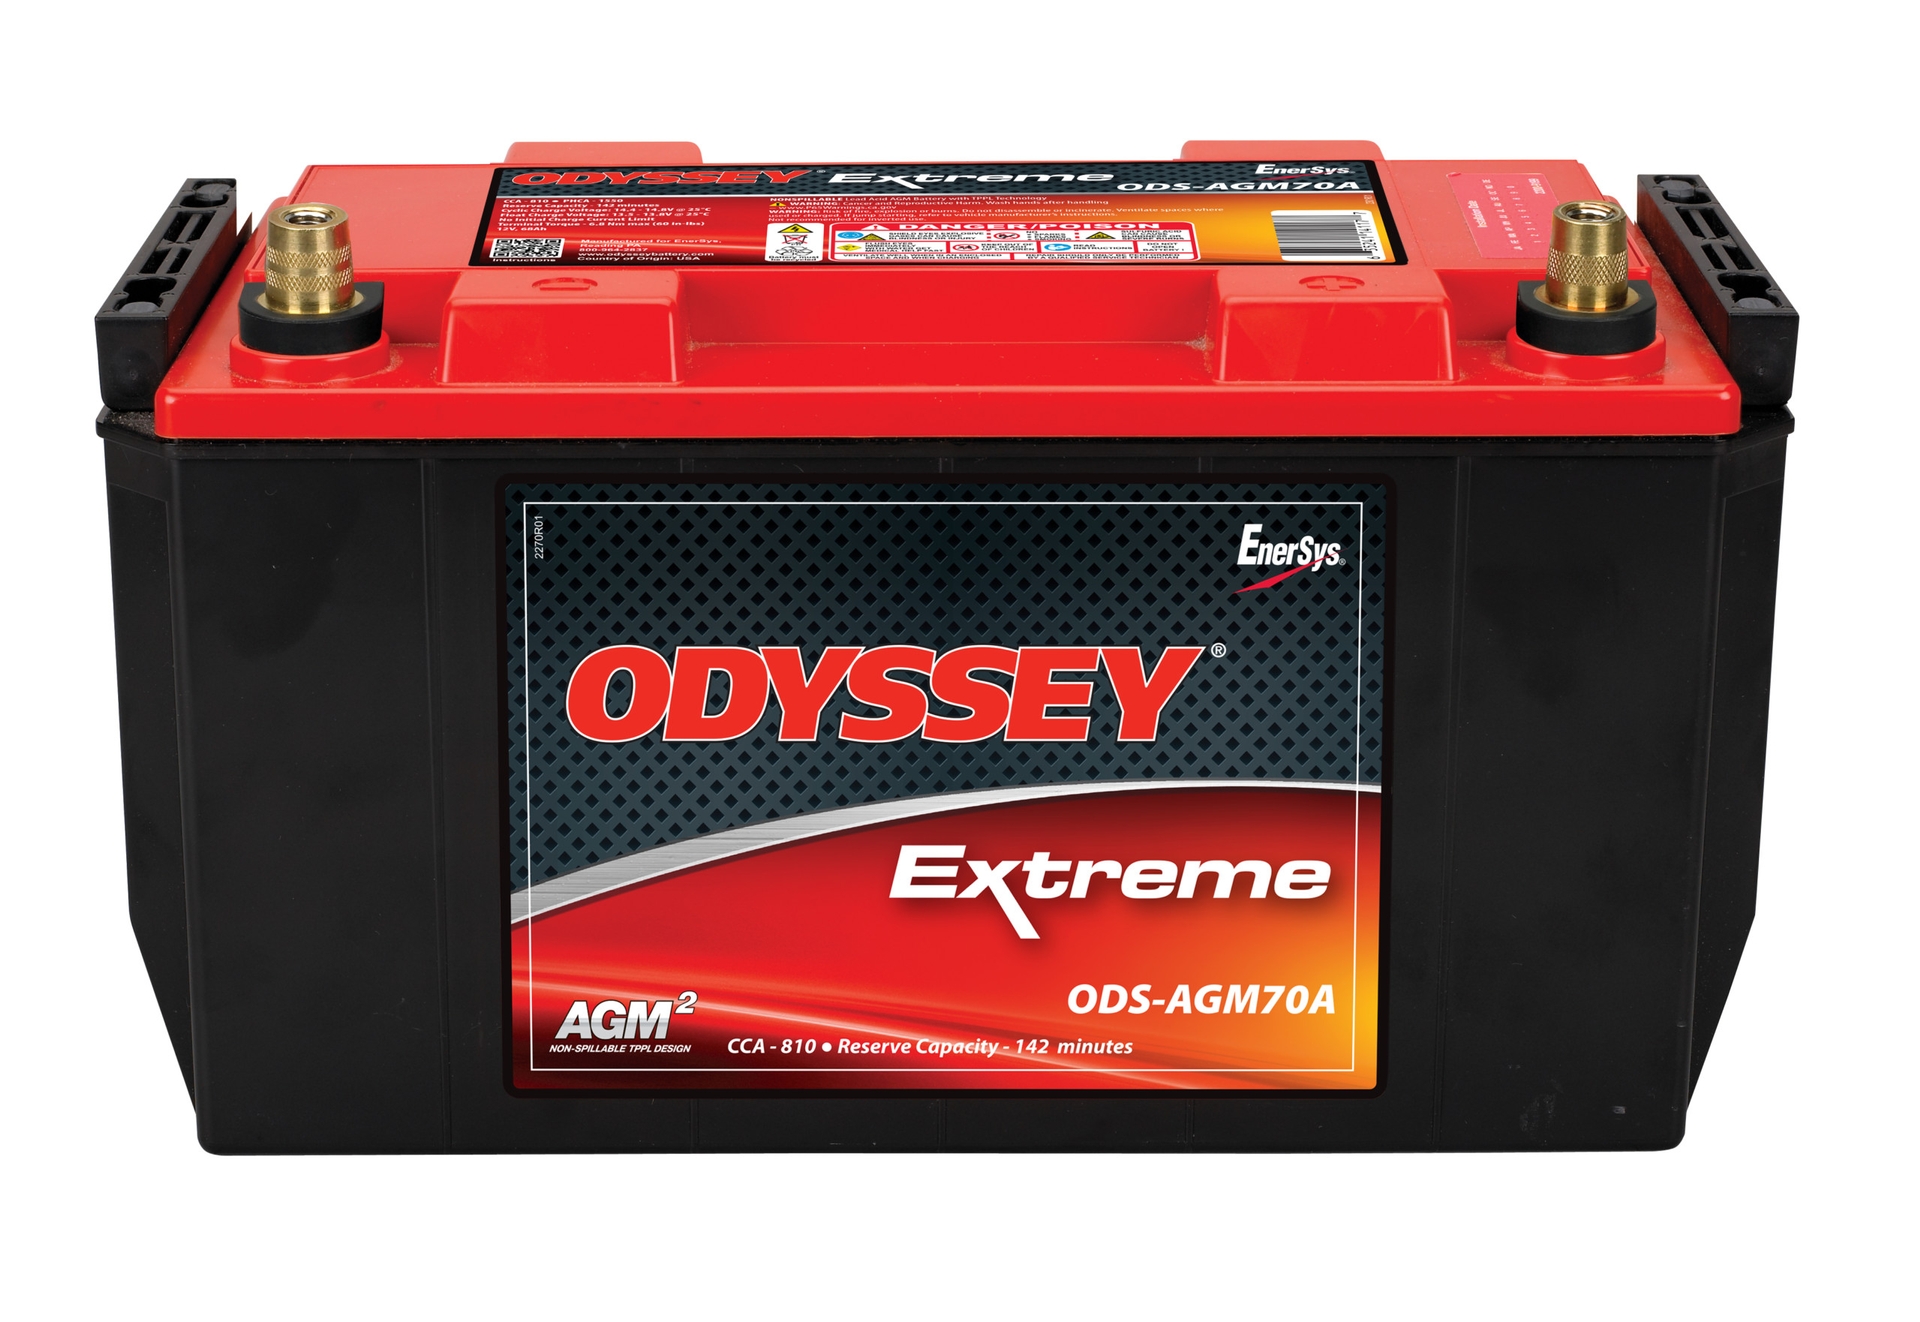 Battery pc. Батарея аккумуляторная pc680 17ah Odyssey ENERSYS. Odyssey pc950 аккумуляторы. Одиссей 110 AGM. Odyssey extreme PC 1200.